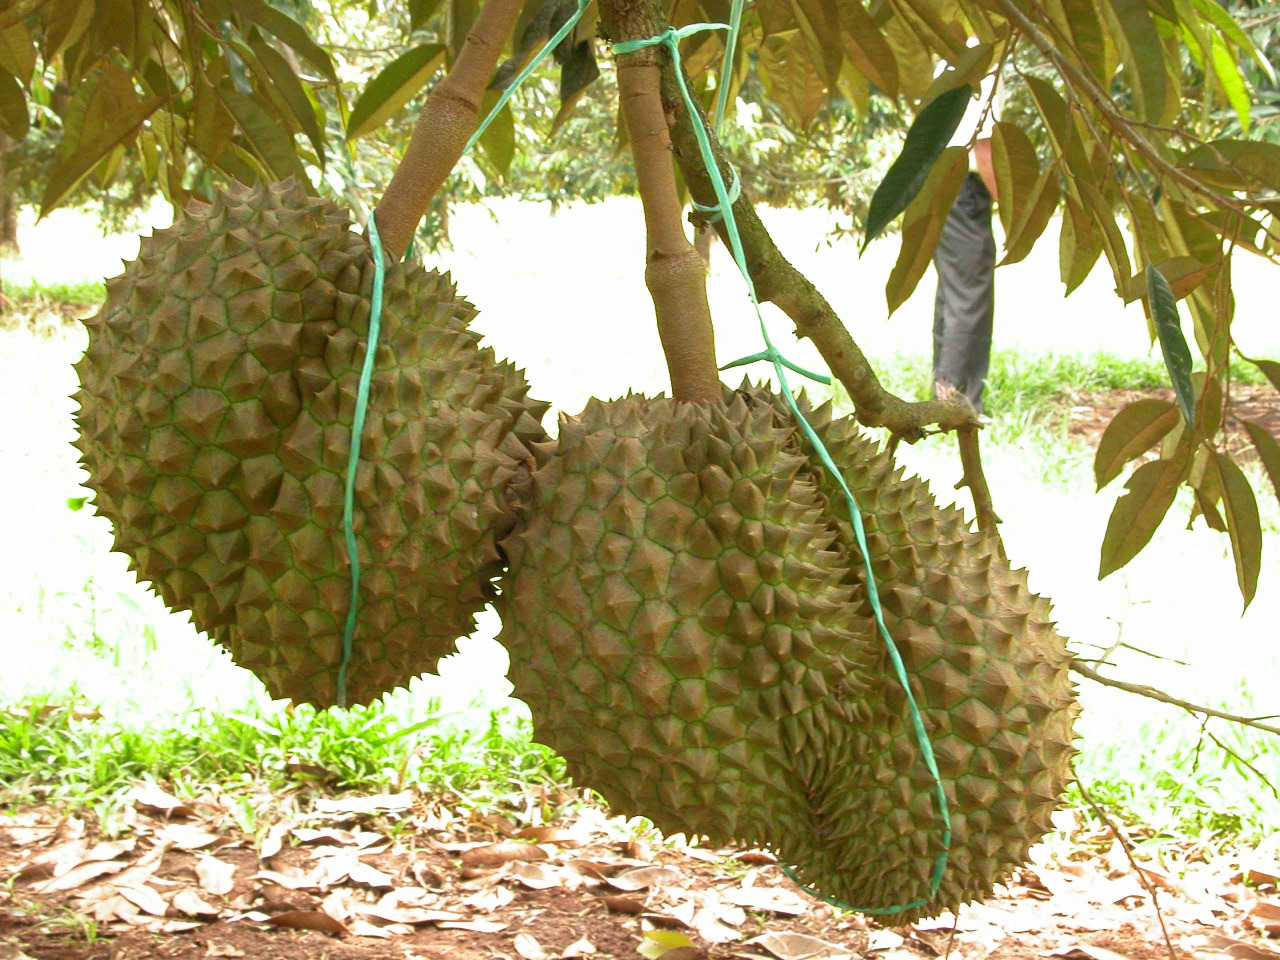 Daun Durian Petruk Berbentuk Besar dan Tipis - Mengenal jenis durian dari daunnya mulai dari daun durian petruk berbentuk besar dan tipis